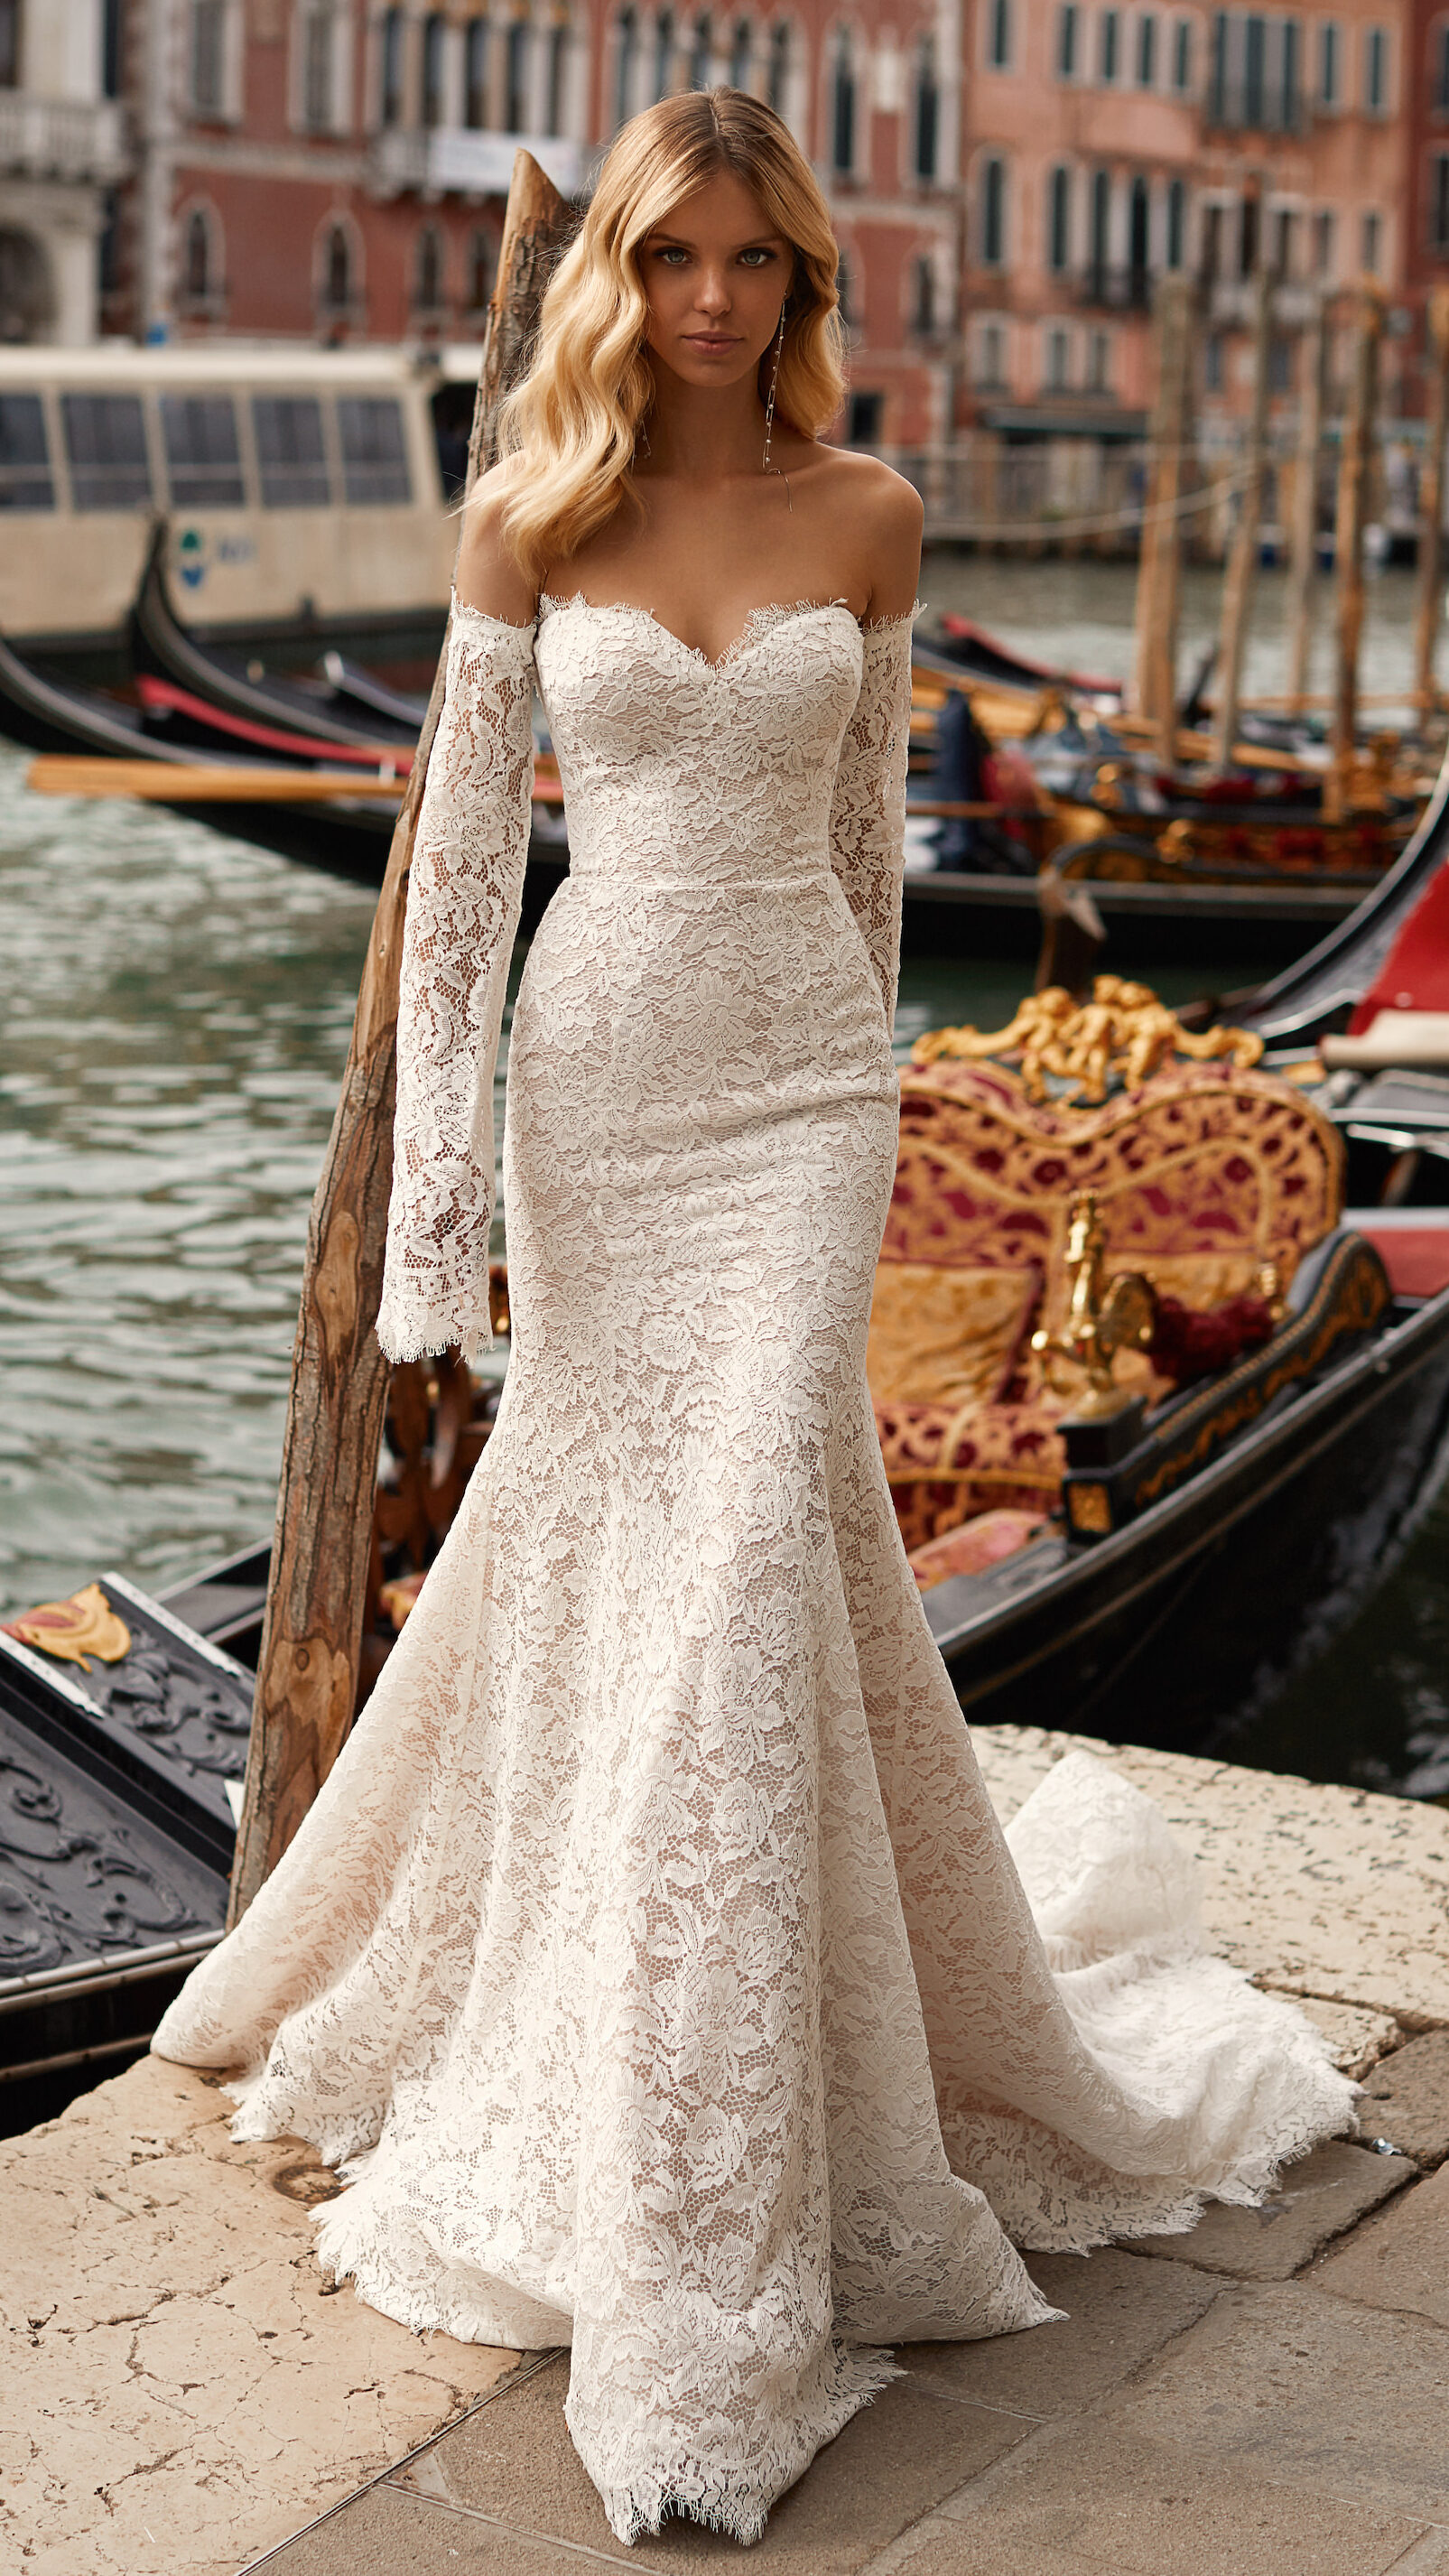 Alisia by Katy Corso wedding dress